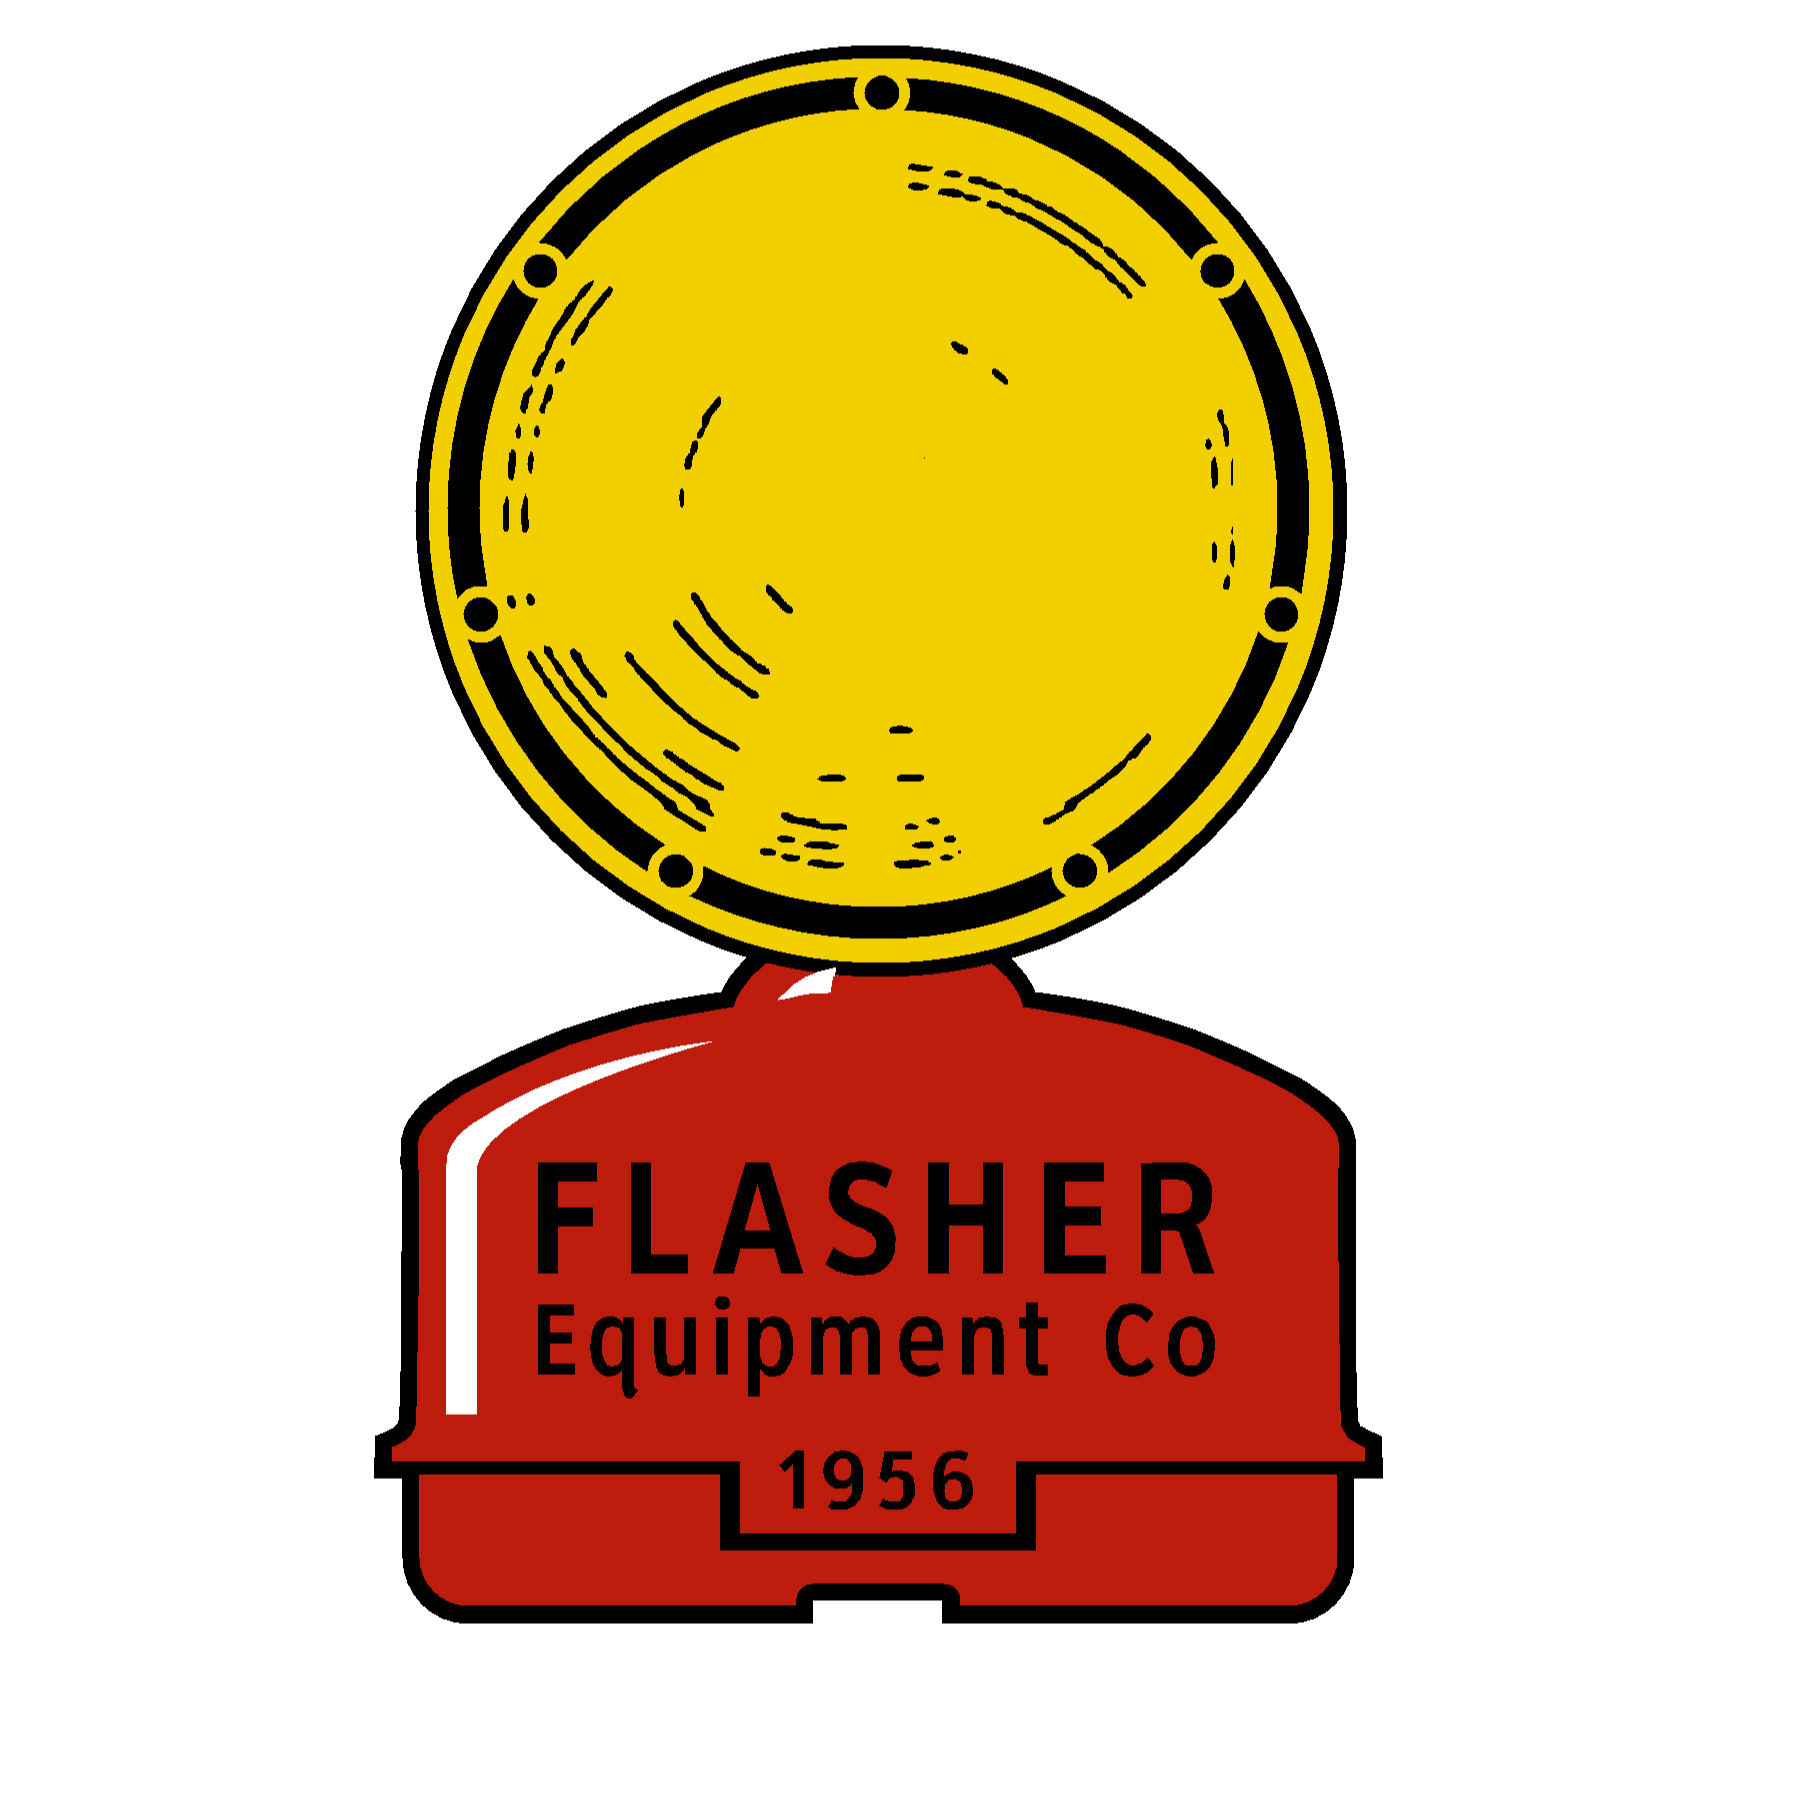 Company logo of Flasher Equipment Co